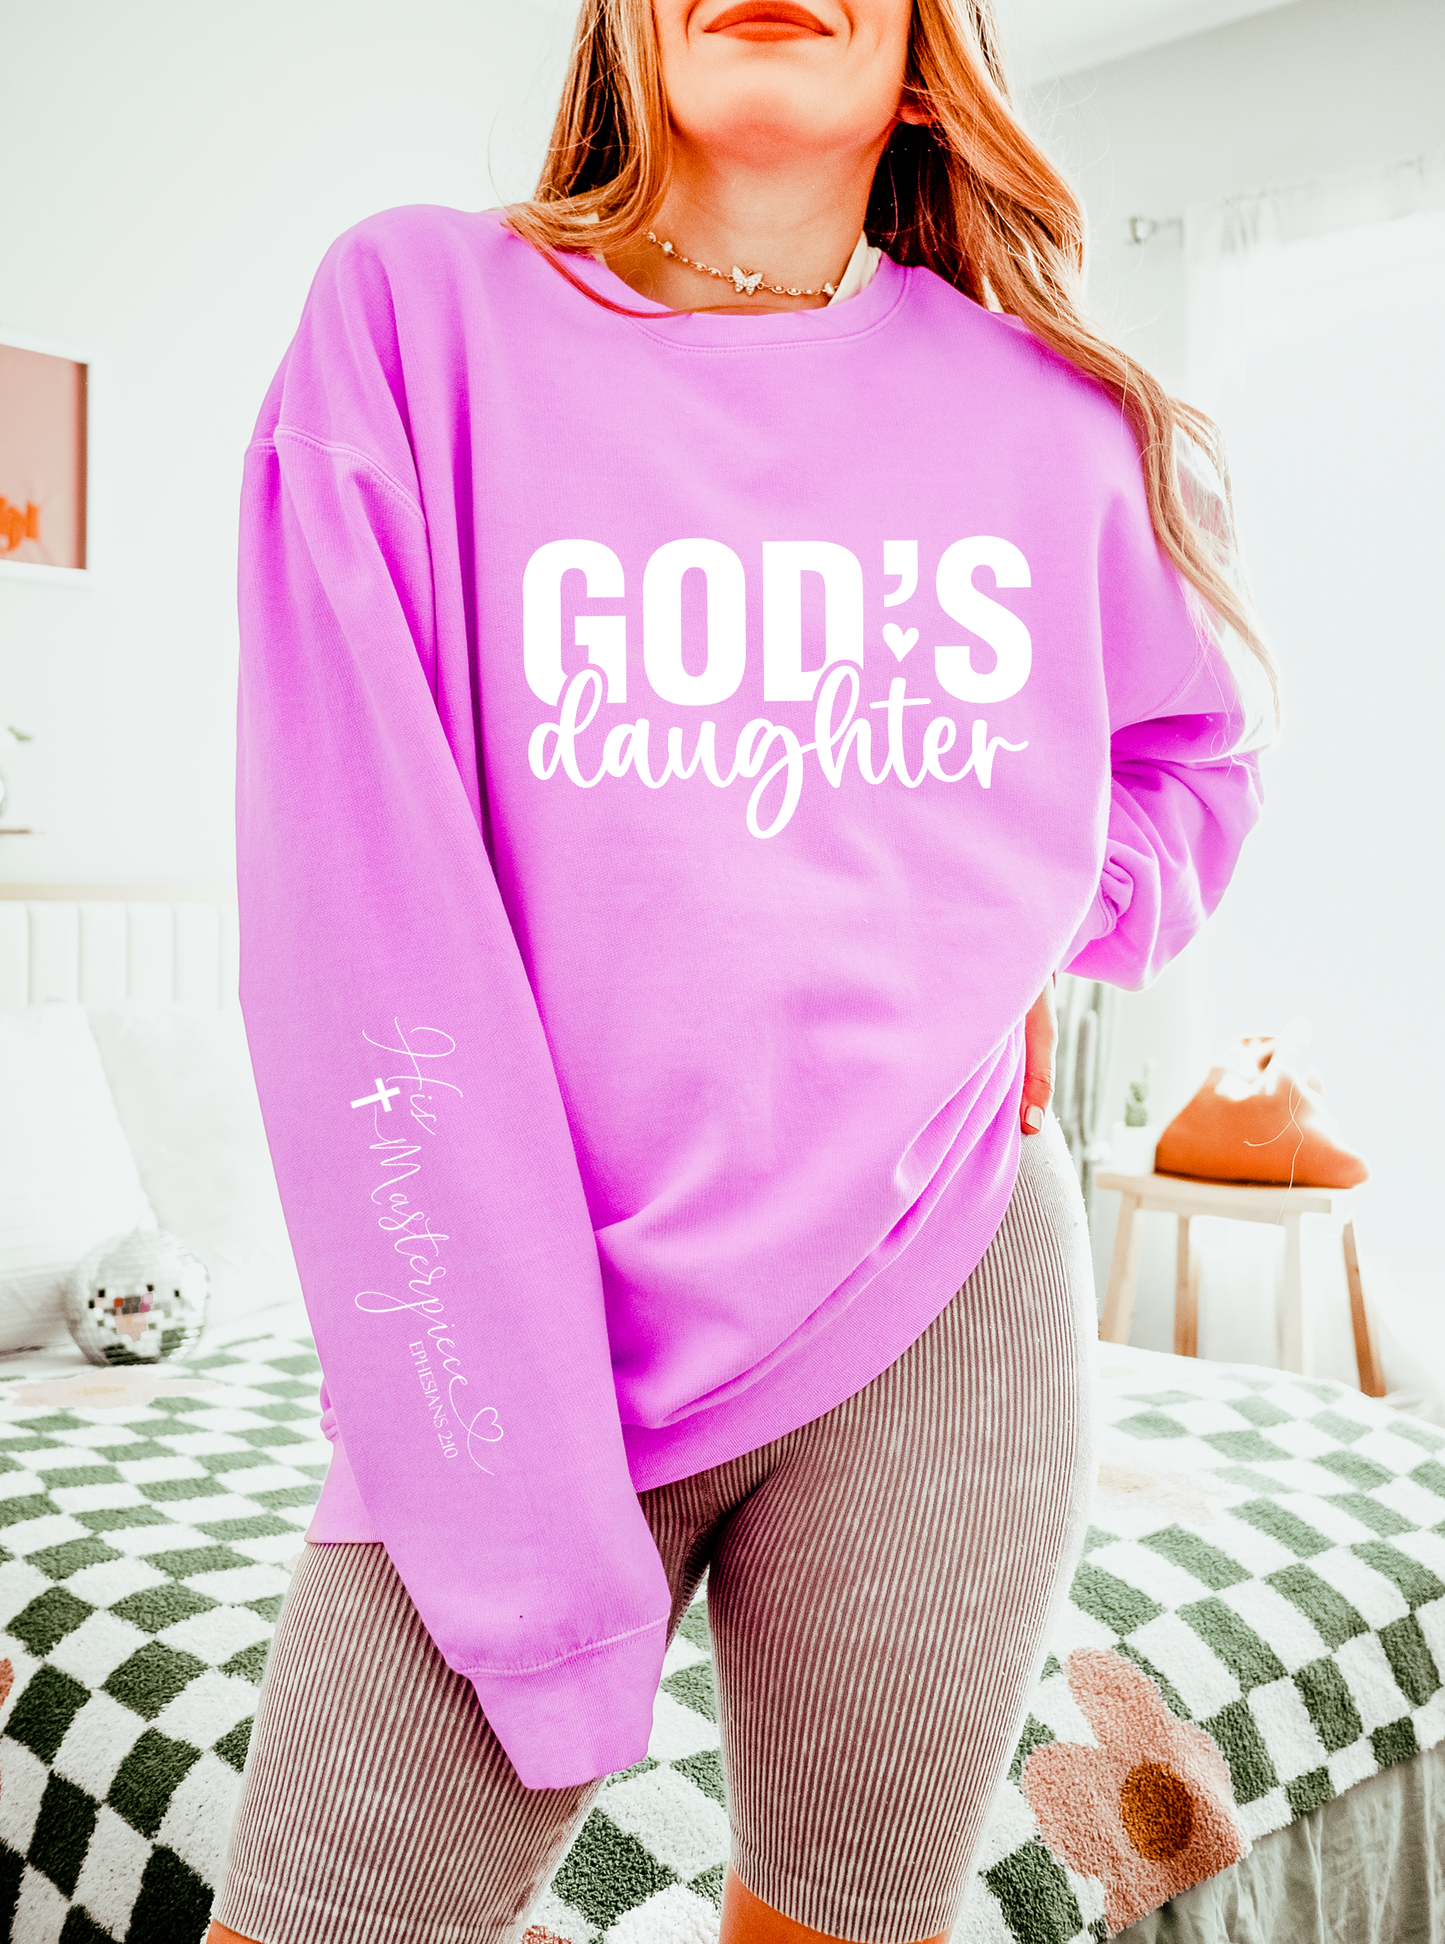 God's Daughter, His Masterpiece Christian Bible Verse Scripture Unisex Lightweight Crewneck Sweatshirt